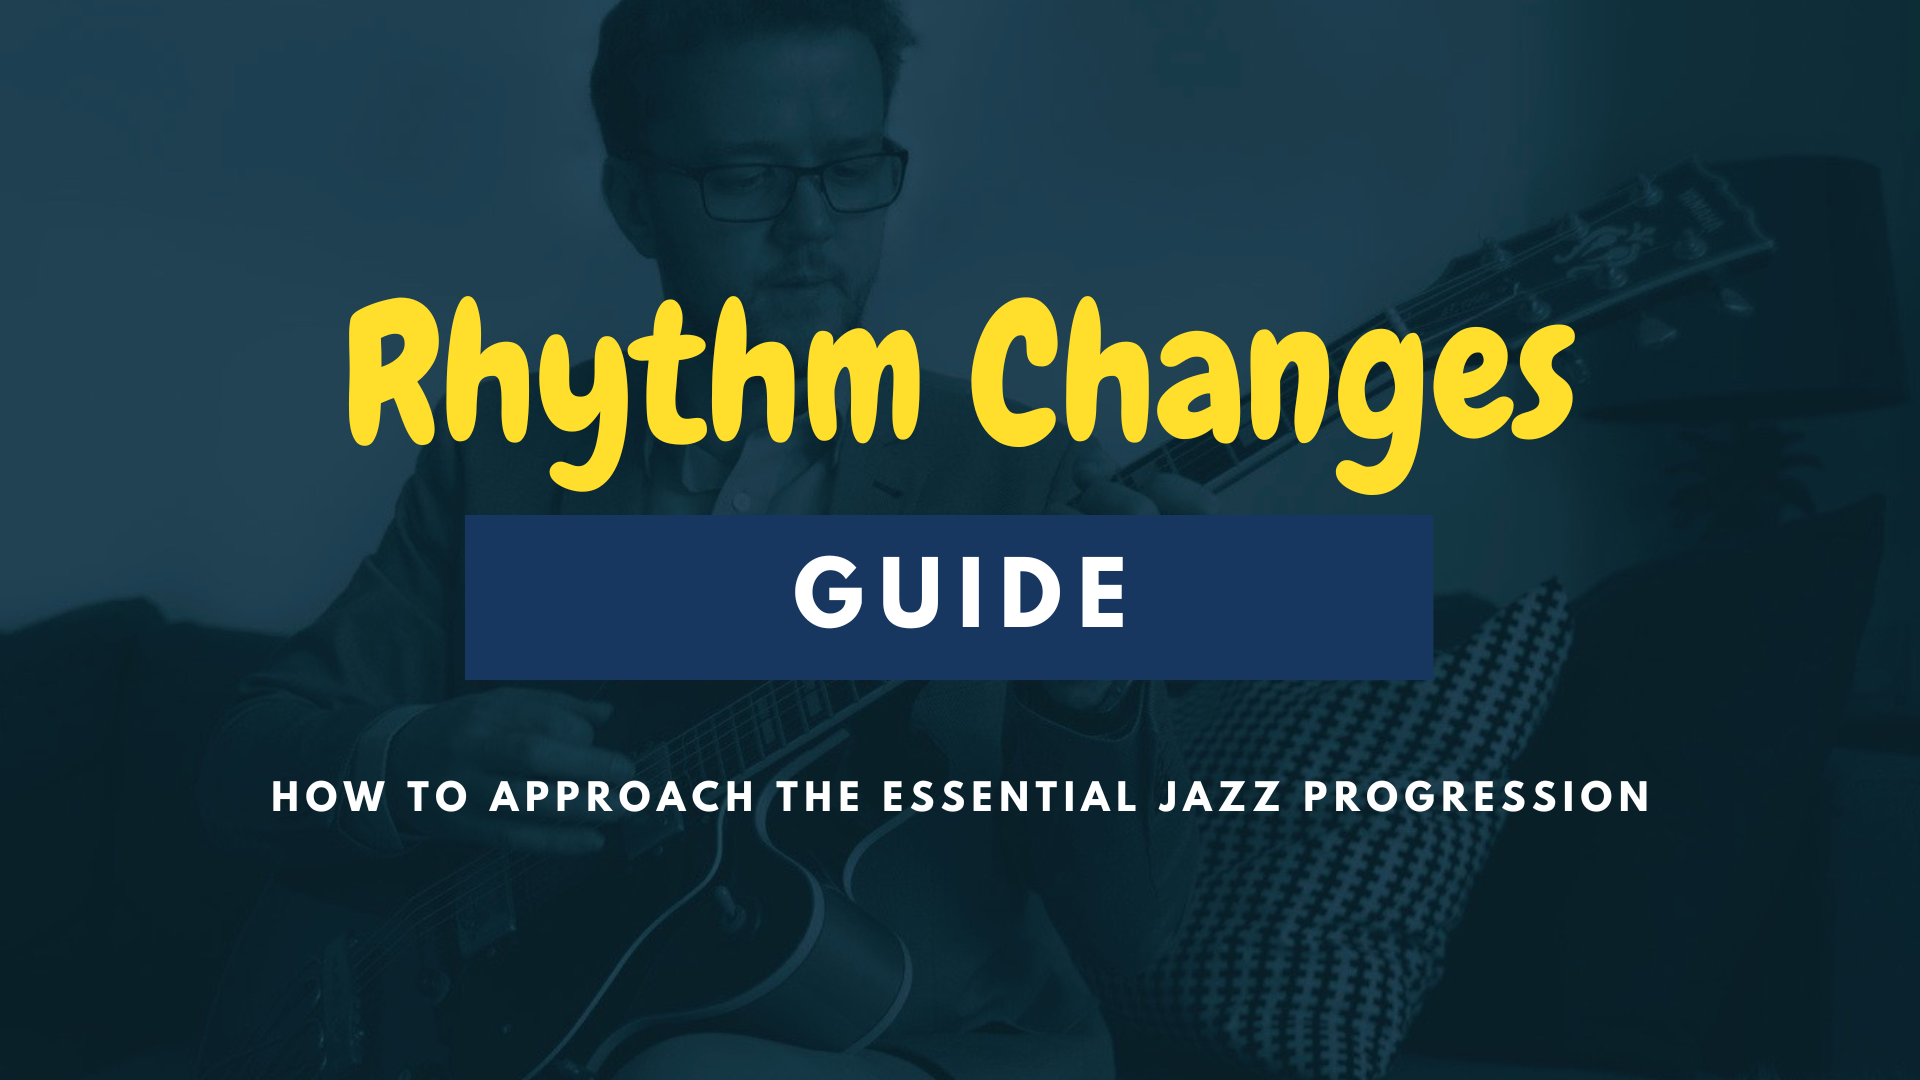 Rhythm Changes Guide